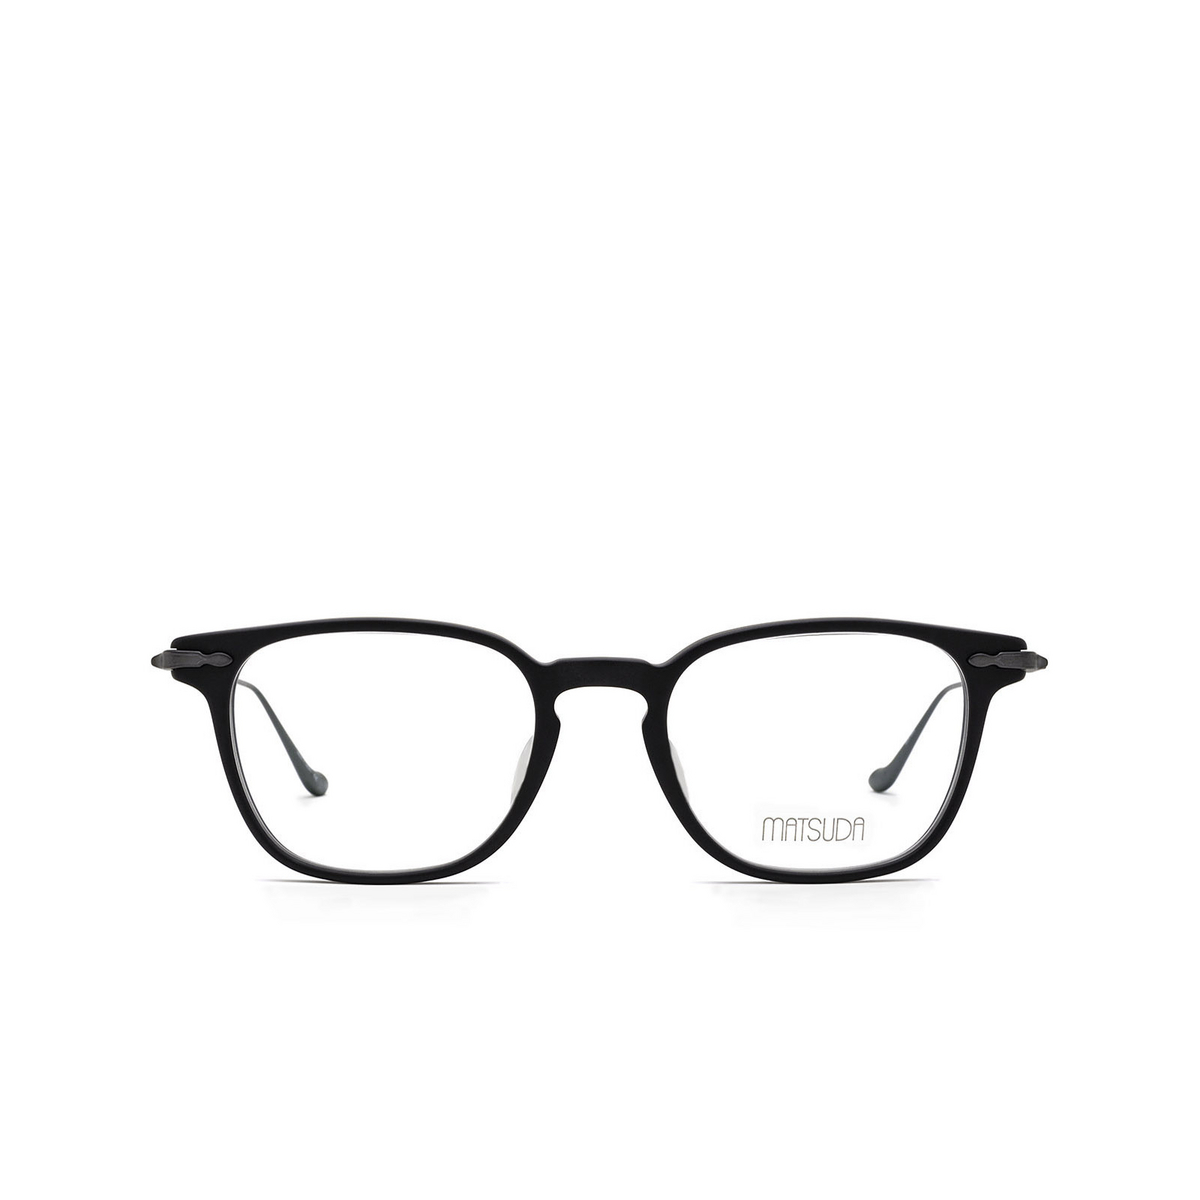 Matsuda® Square Eyeglasses: M2052 color Matte Black - Matte Black Mbk-mbk - front view.